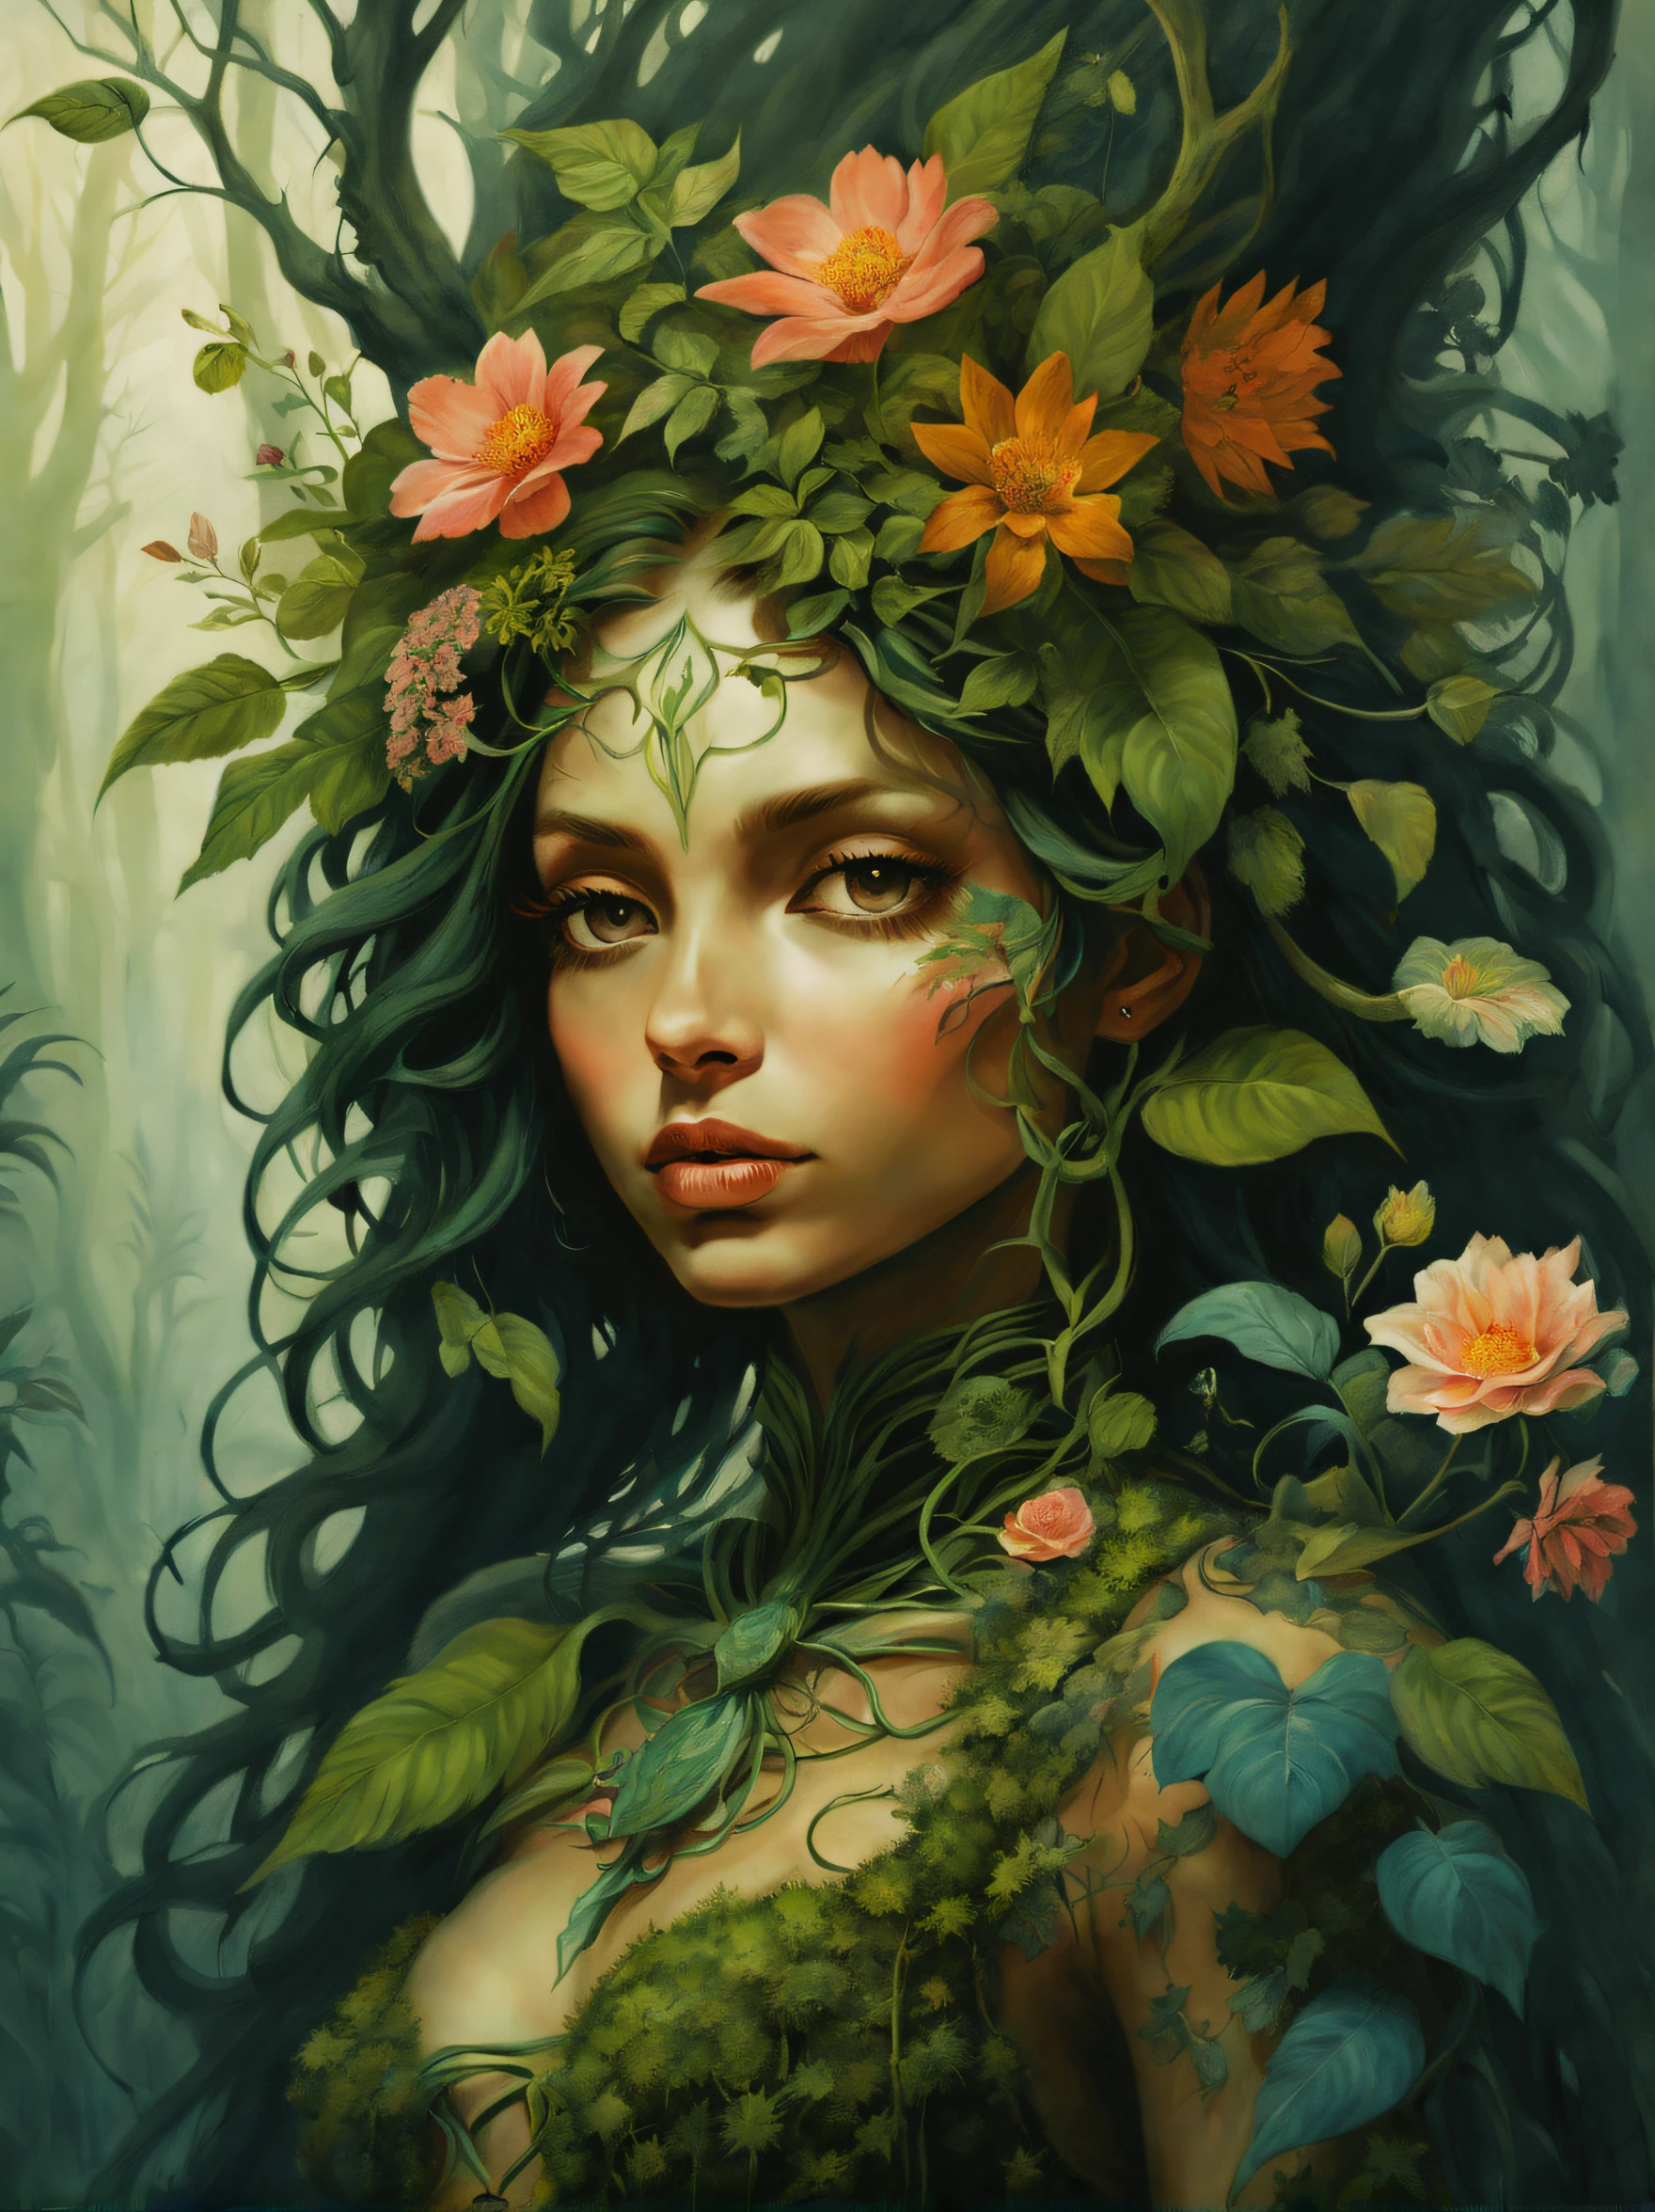 painting in the style of 梅花卡布拉爾, 画一个生物, 我们将一个女孩和不同的植物和花卉结合起来, 植物的葉子和樹枝構成了女孩的身體, 女孩的枝條上長著葉子和花朵&#39;用你的頭, 关于那个女孩&#39;他的身上长满了缠绕植物的美丽花朵., 把女孩種植在長滿青苔的森林裡, 可愛的臉孔, 詳細的女孩臉, 非常詳細, 魔法世界, 梅花卡布拉爾, 傑拉德·布羅姆